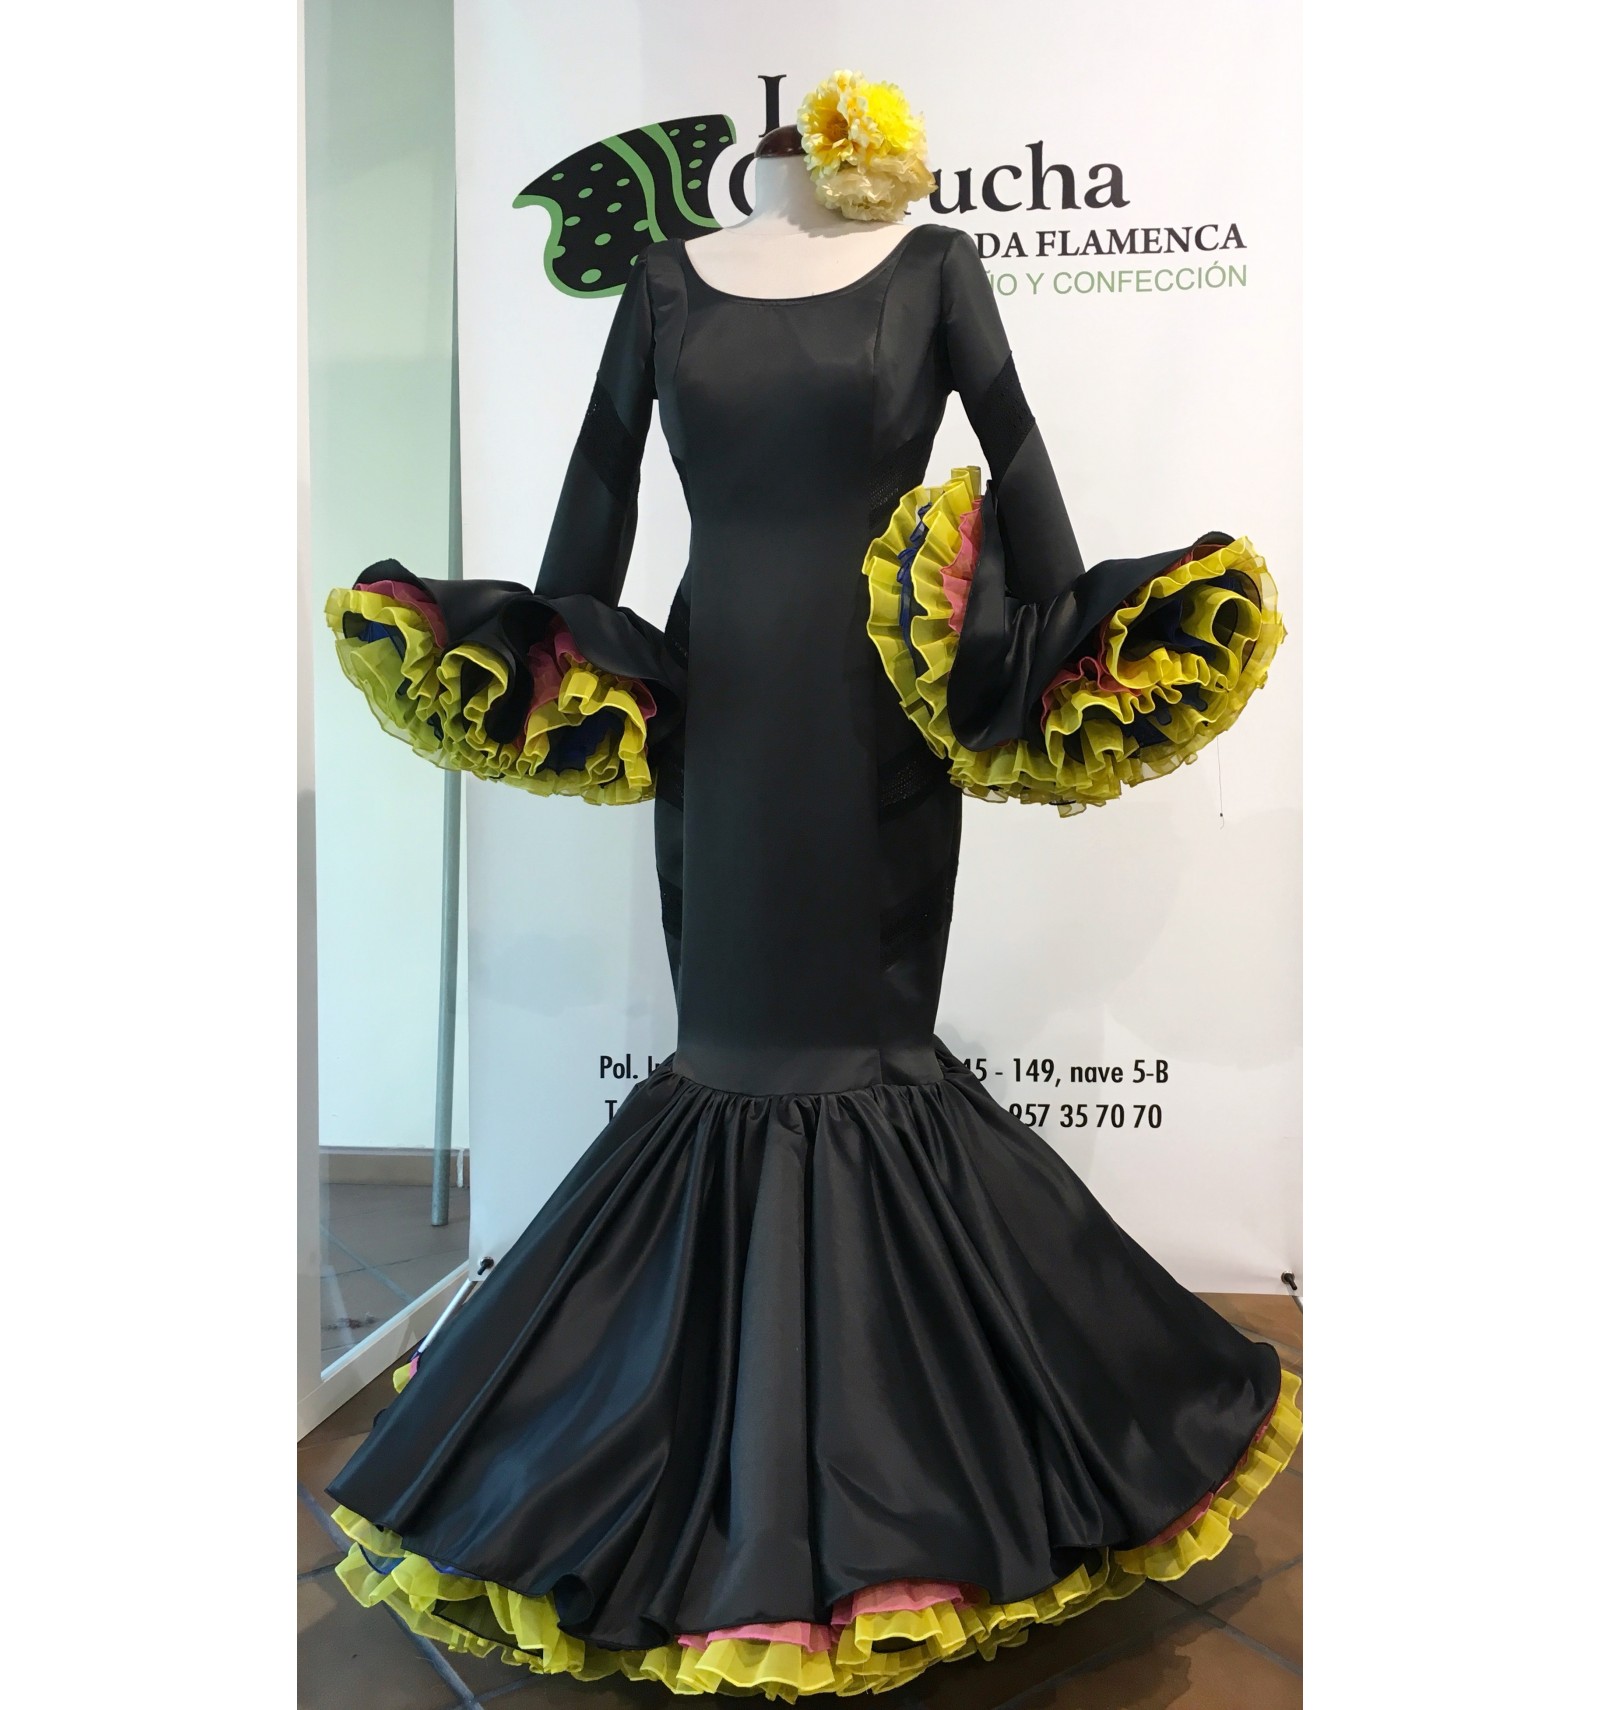 Traje de Flamenca Canastero - La Carrucha Moda Flamenca